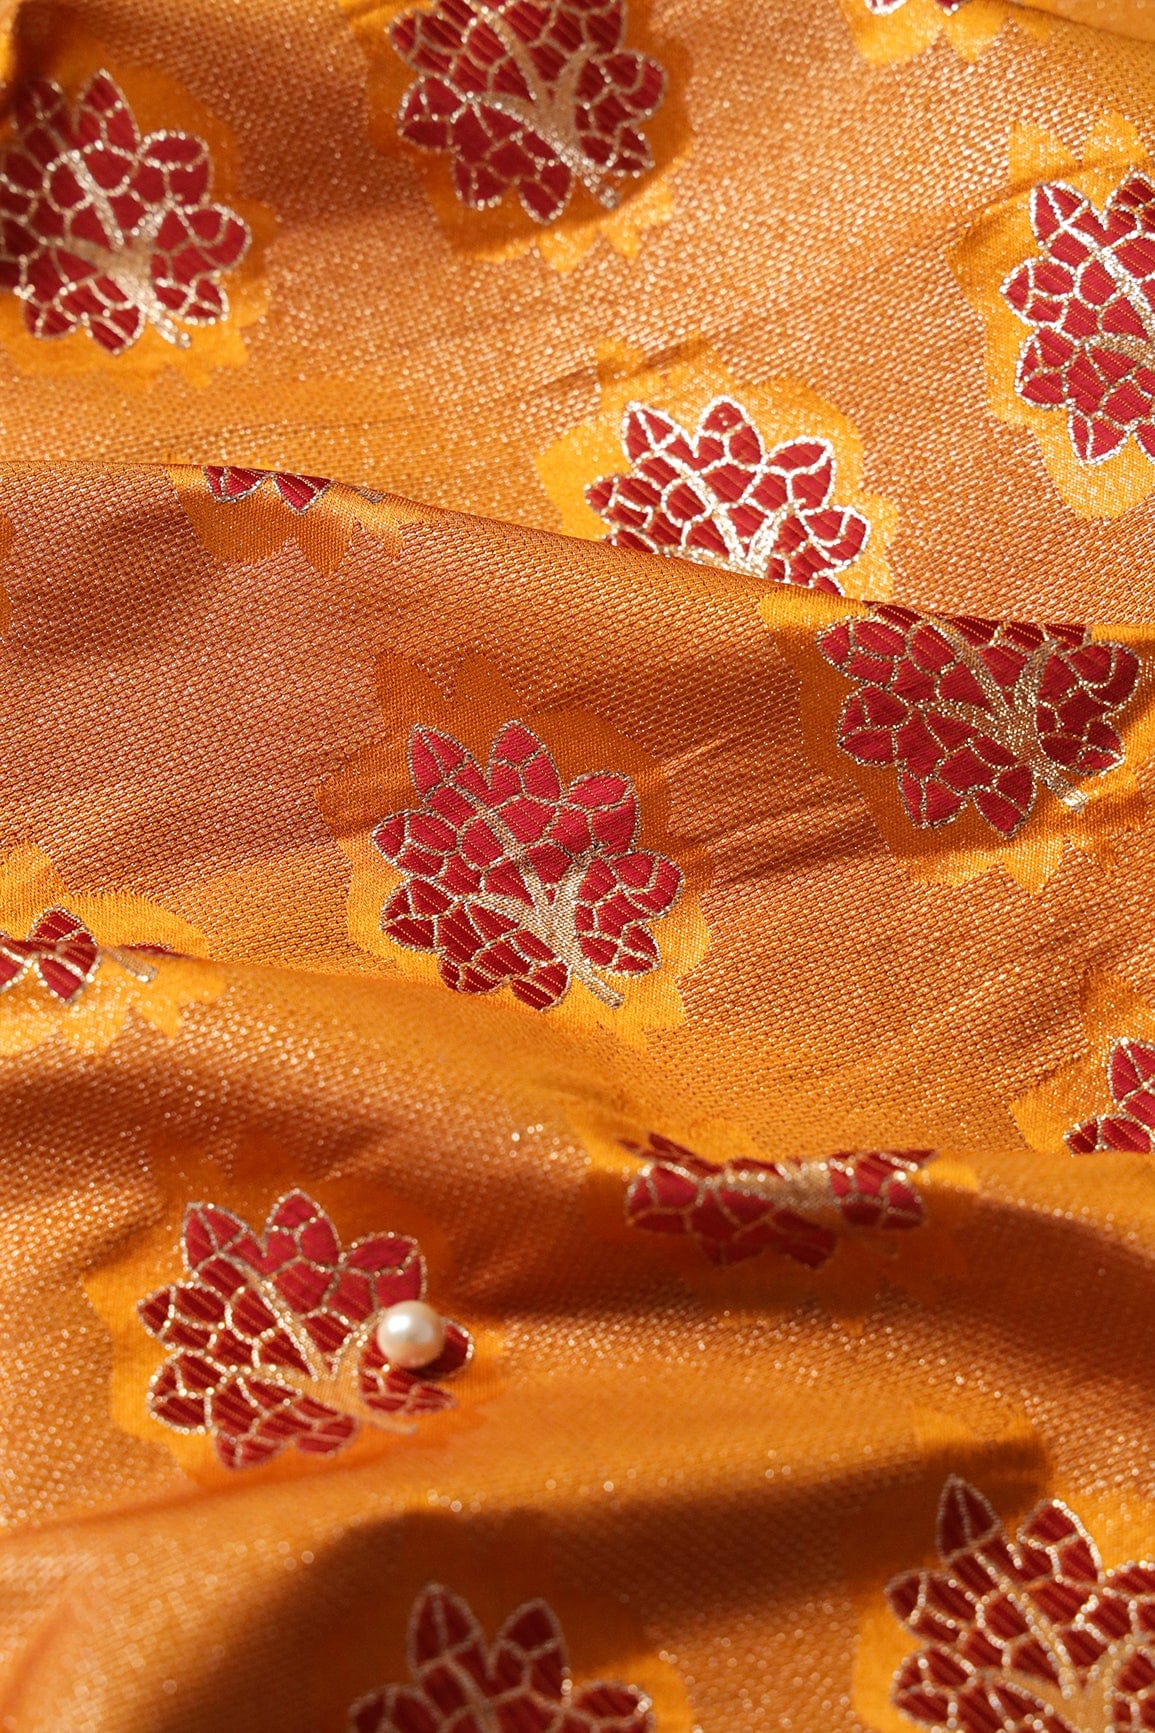 doeraa Banarasi Fabrics Mustard And Red Leafy Jute Banarasi Zari Jacquard Fabric